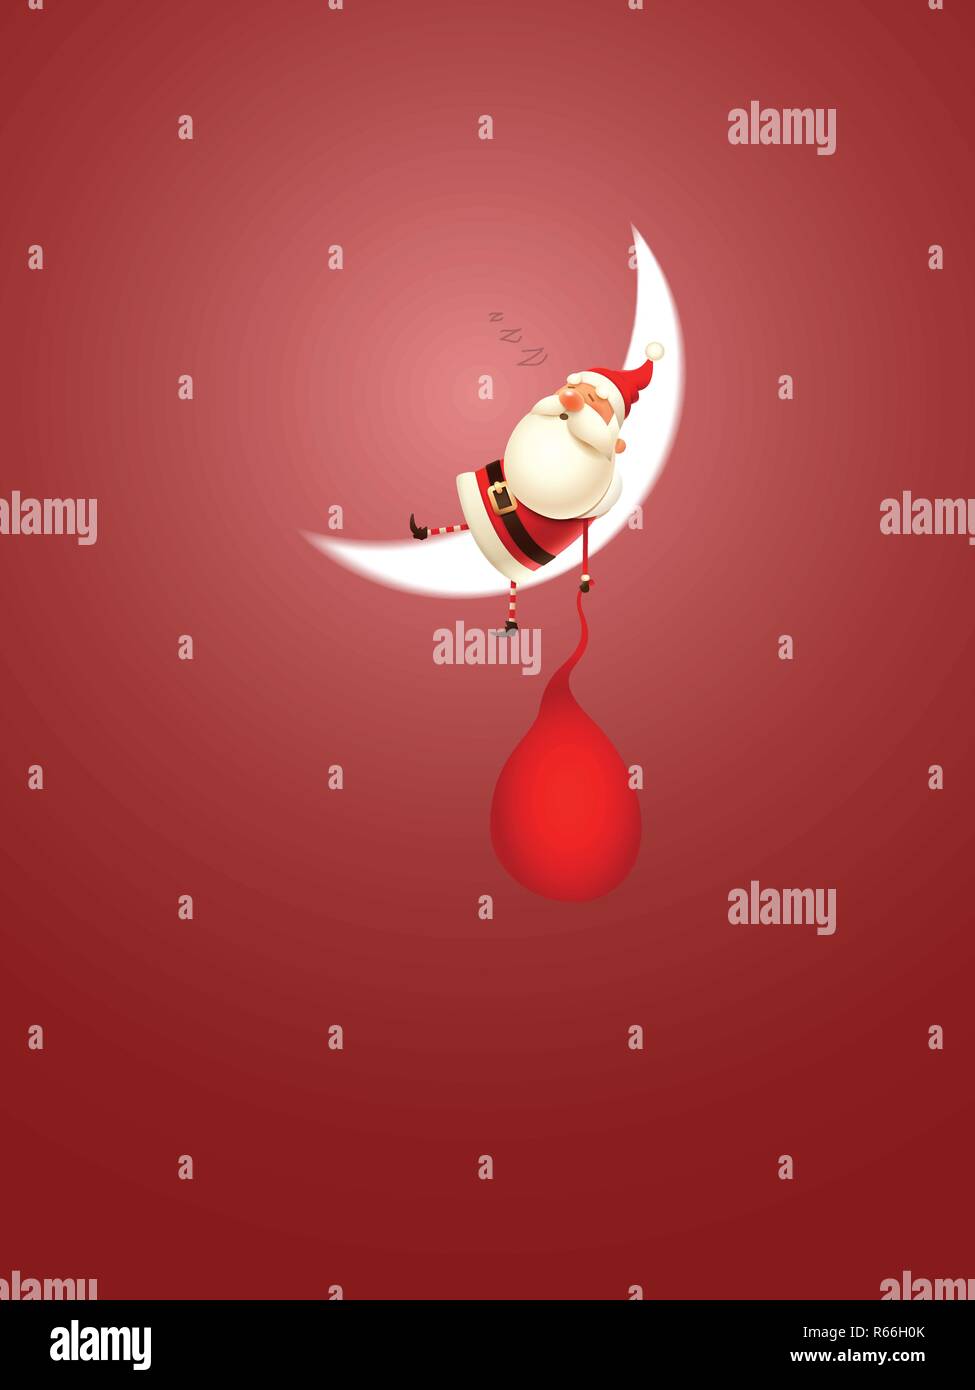 Santa Claus sleep on moon - vector illustration on red background Stock Vector